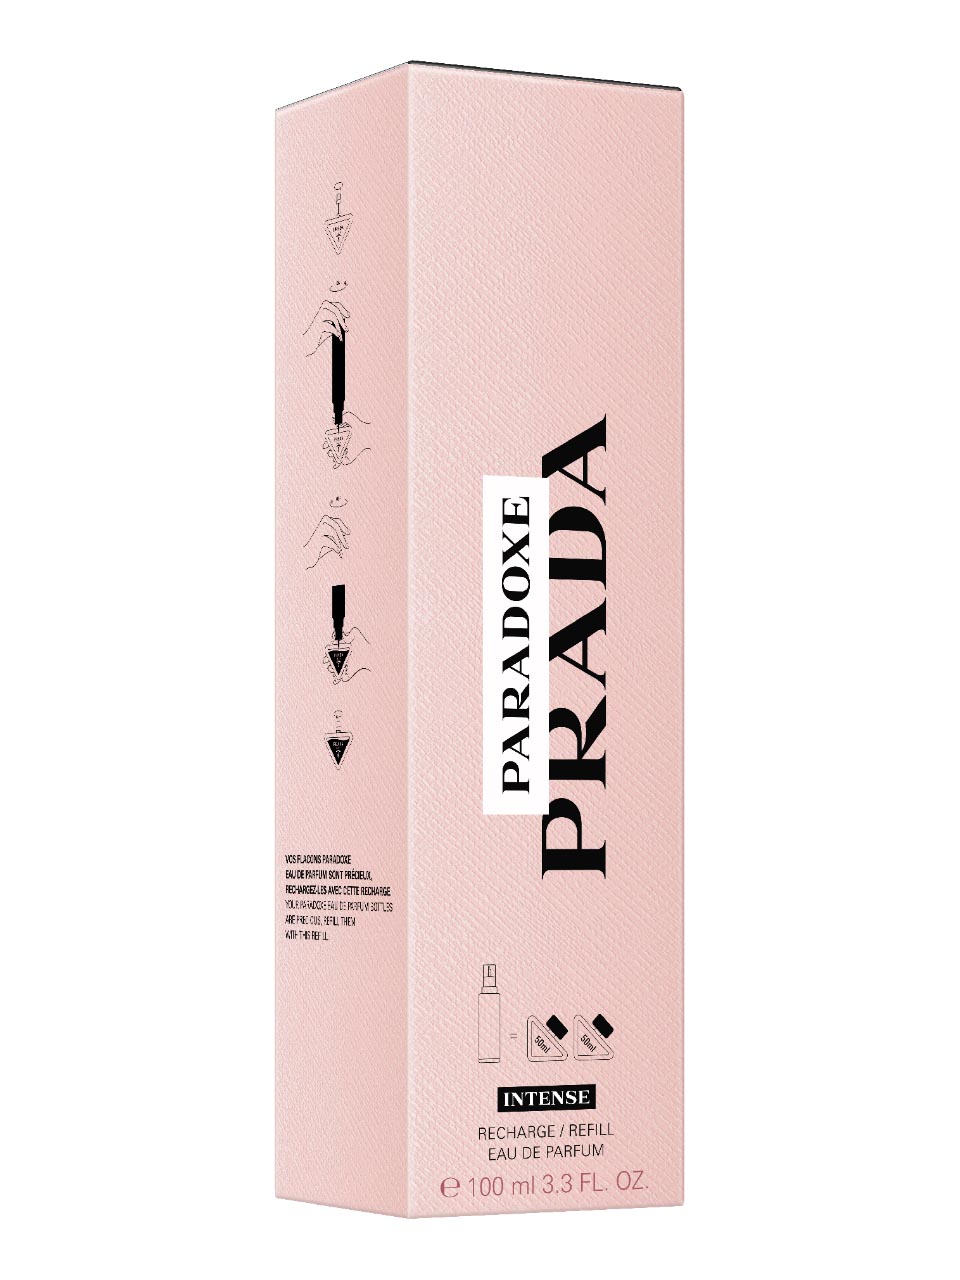 Prada Paradoxe Eau de Parfum Intense Refill 100 ml null - onesize - 1